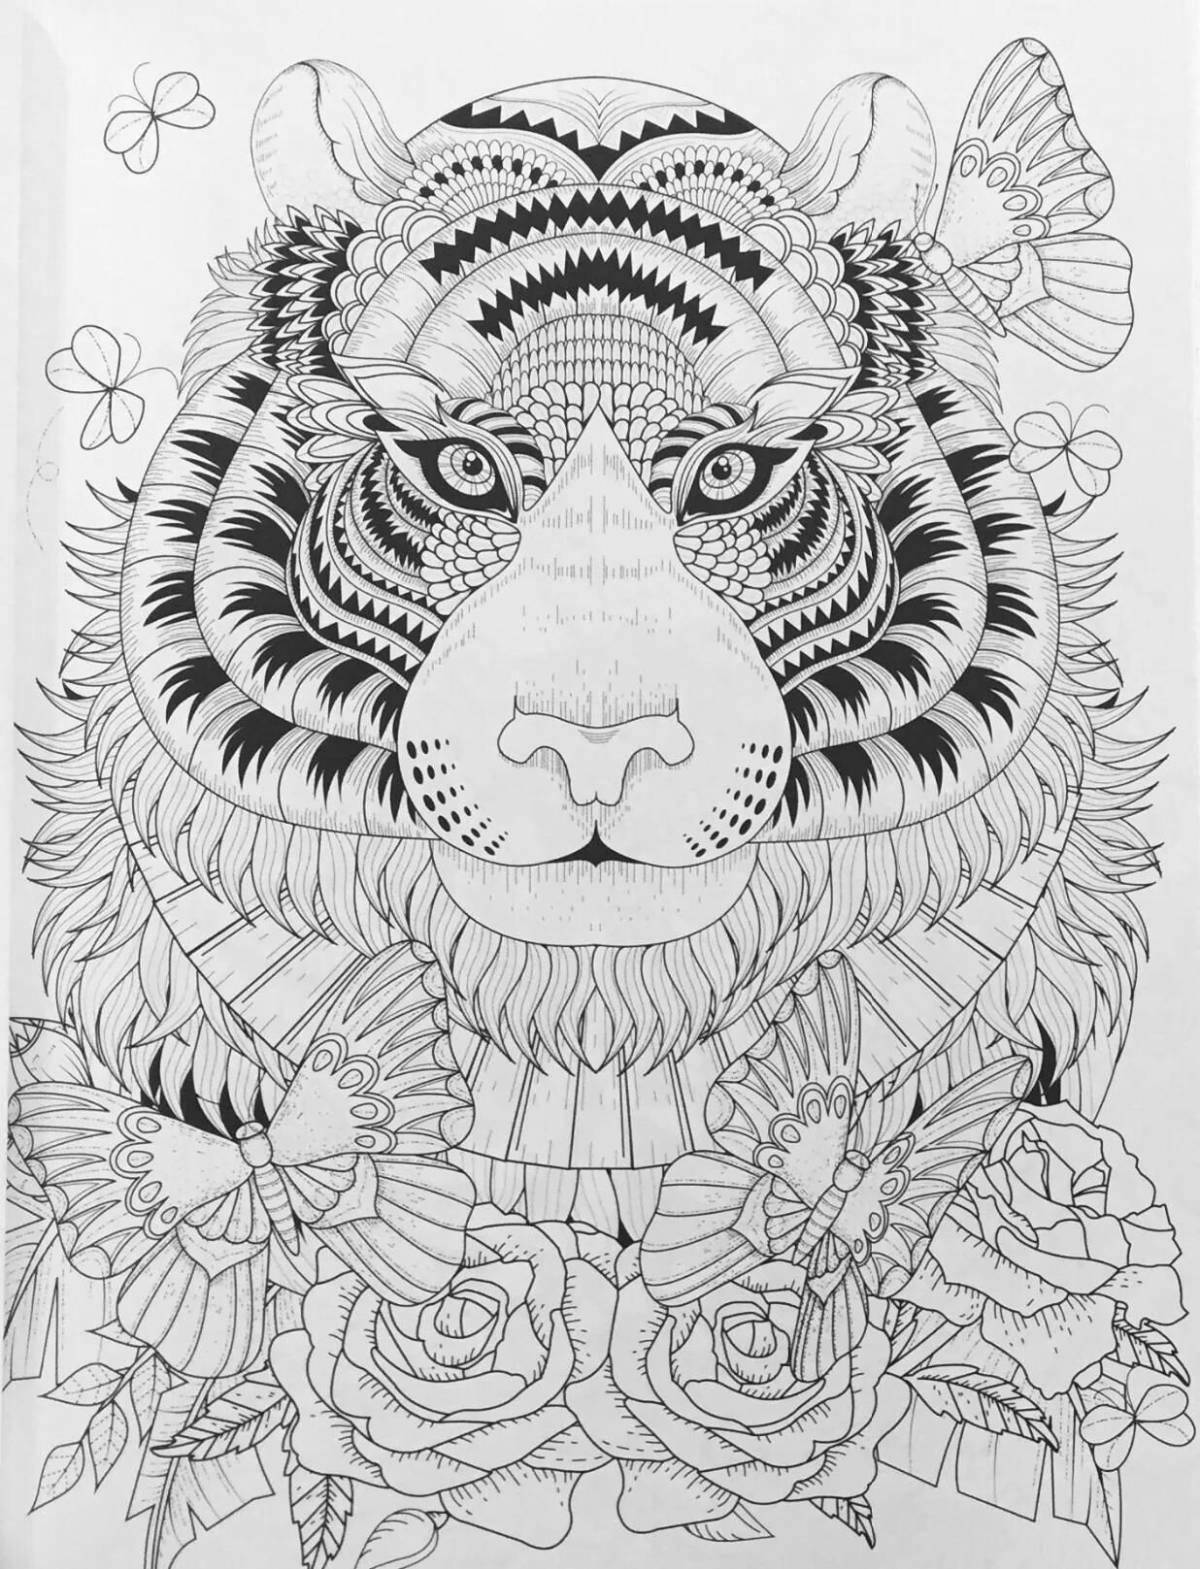 Delightful coloring book antistress tiger cub